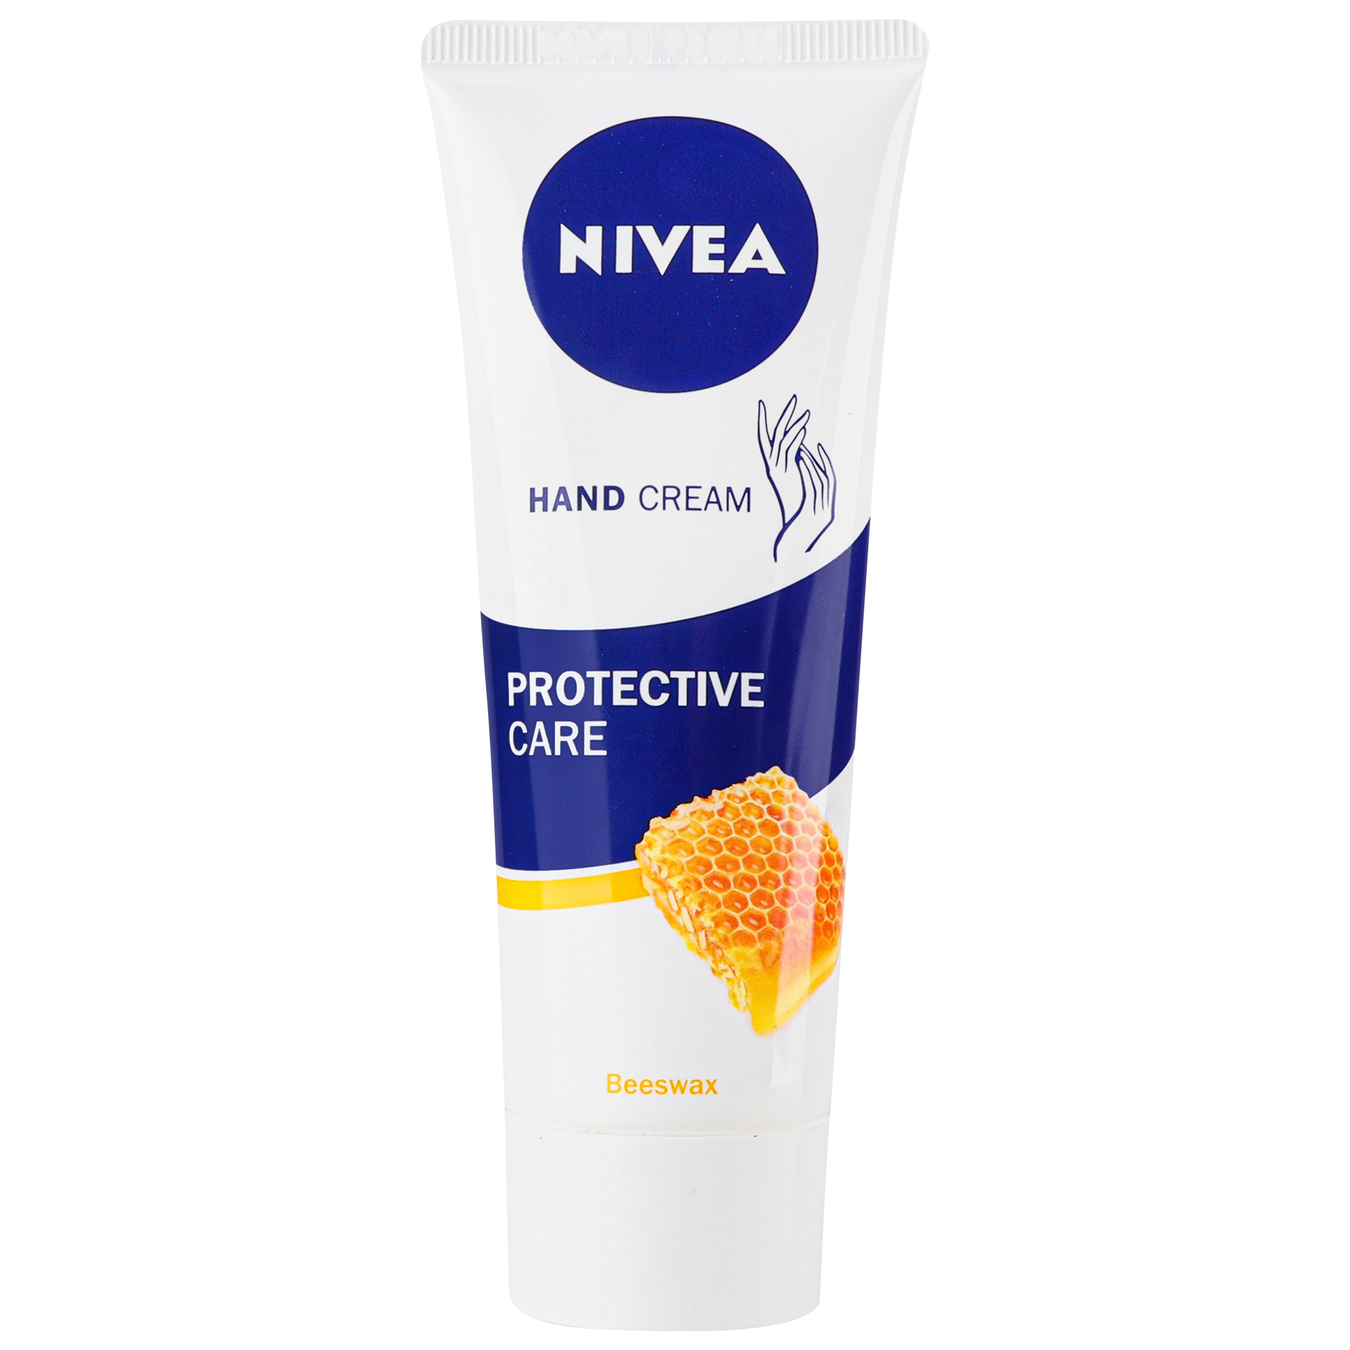 Hand cream Nivea protection and care 75ml